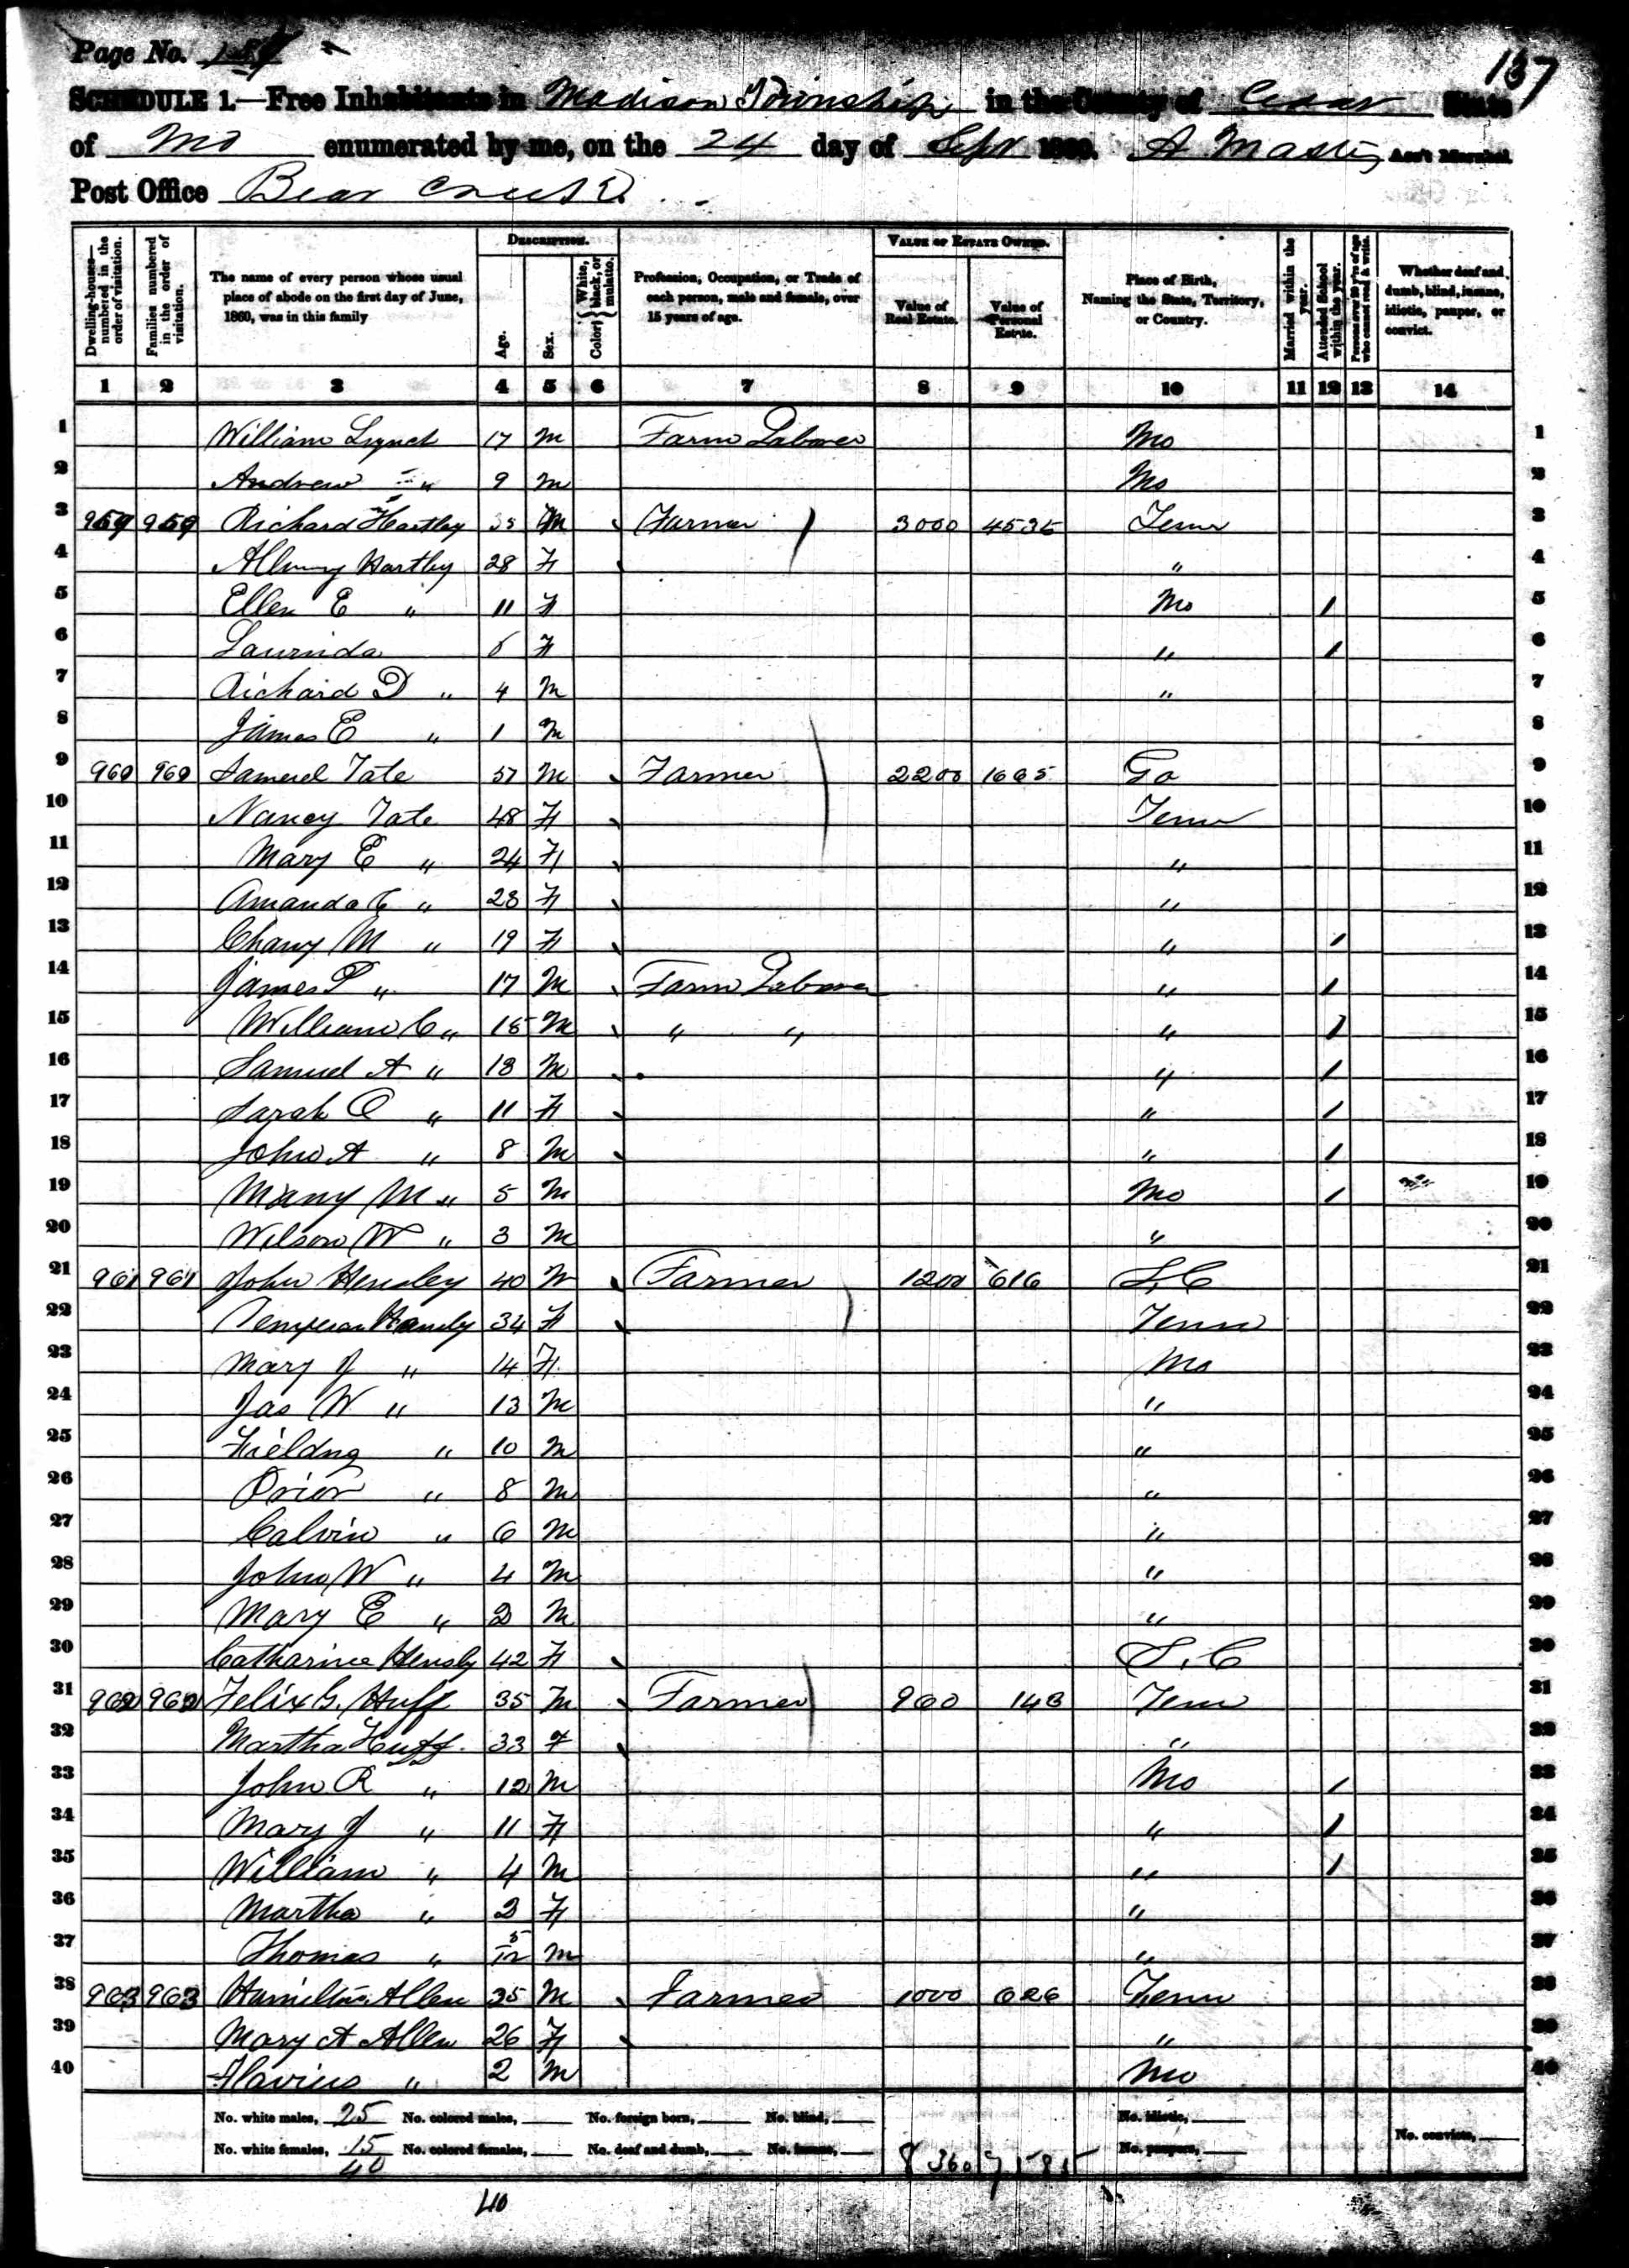 Richard D. Hartley, 1860 Cedar County, Missouri, census